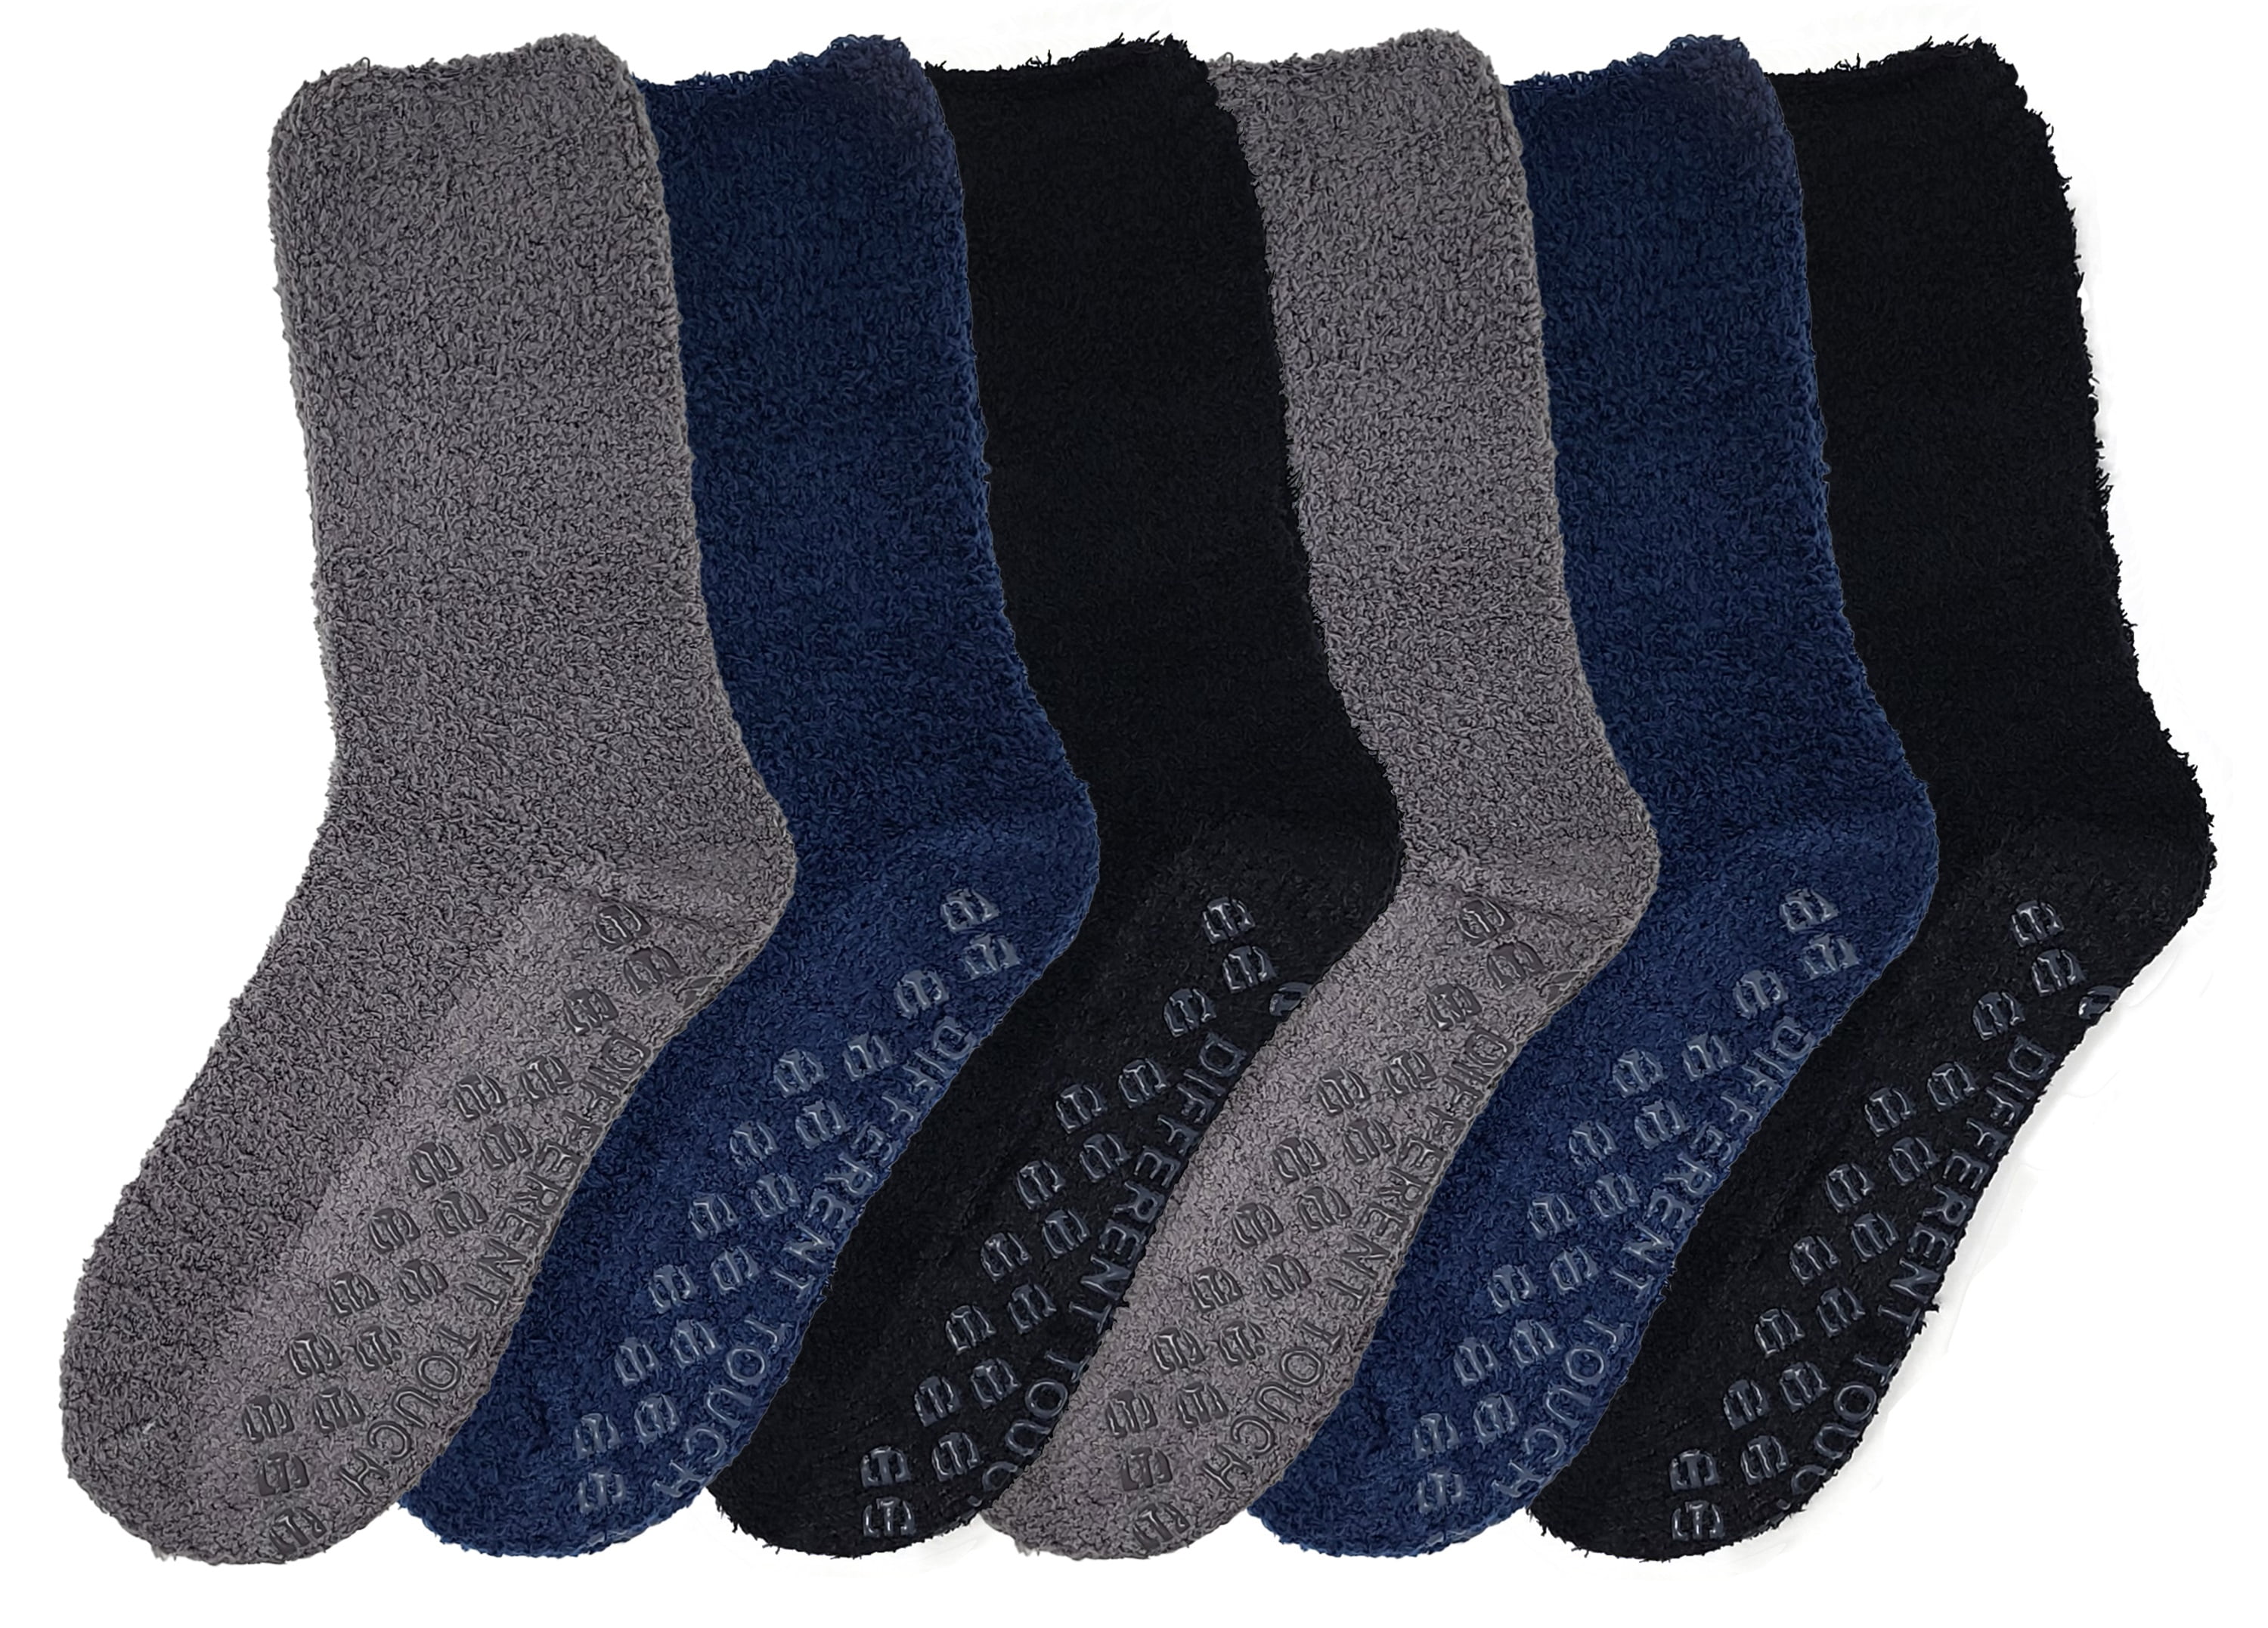 New Mens Sleep Thermal Lounge Socks Non Slip Grip Soft Bed Retro Design 1 Pair 